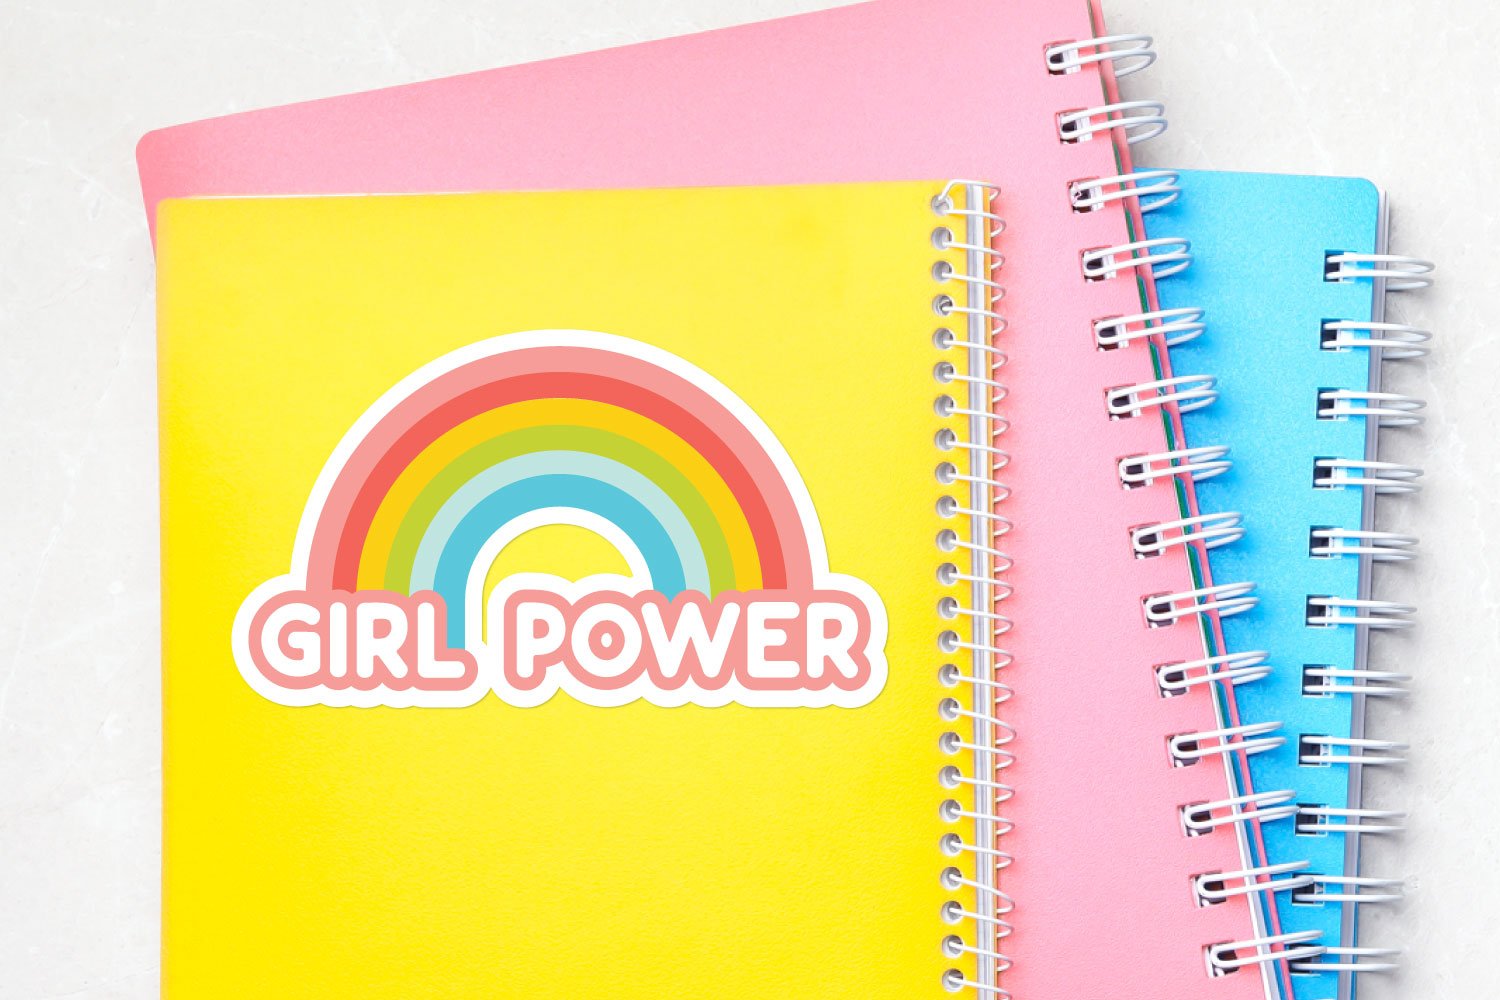 Girl Power sticker on yellow notebook